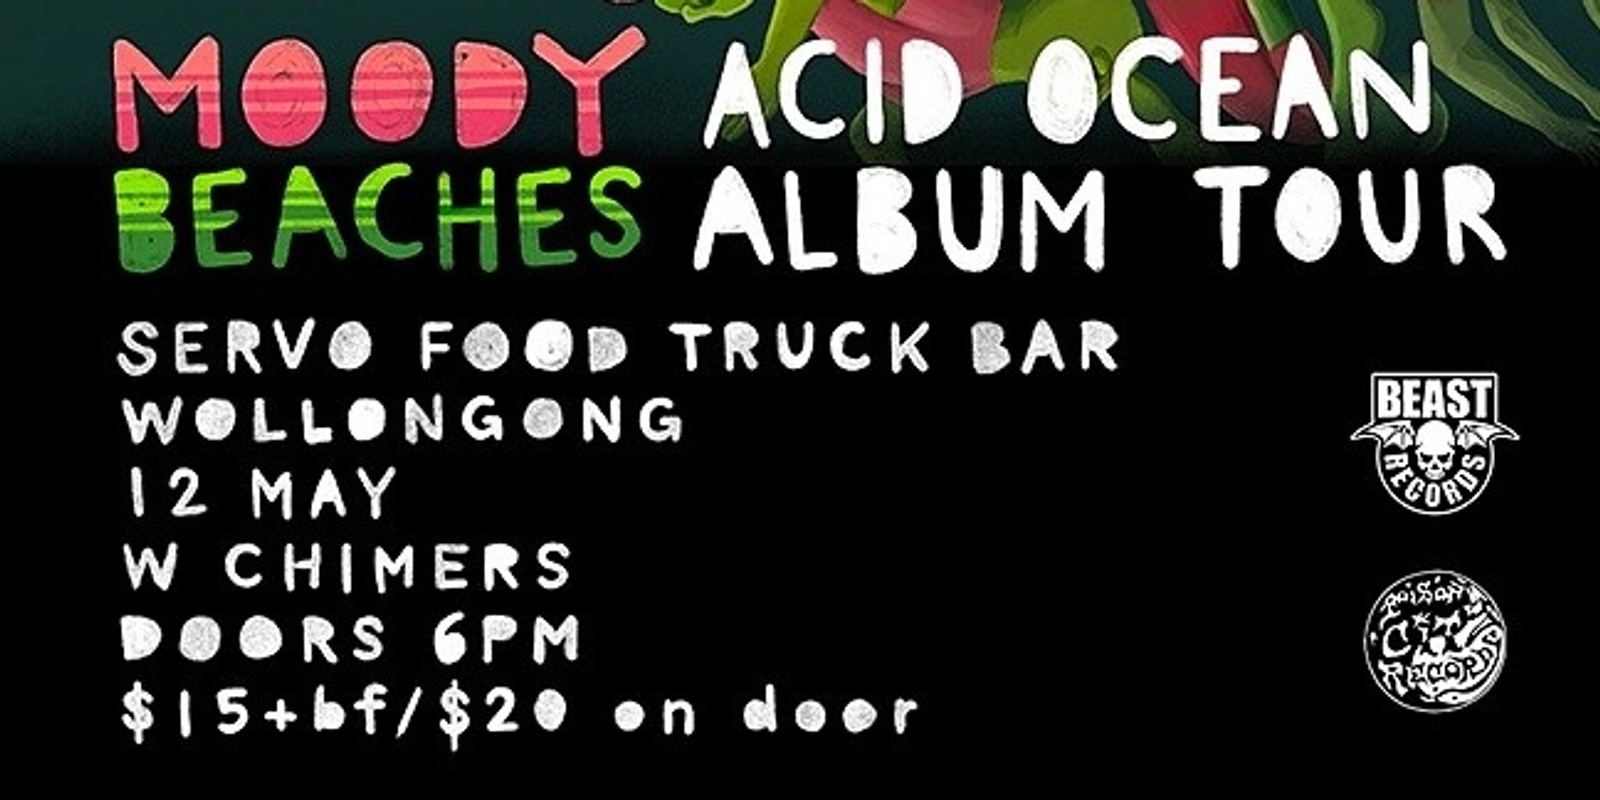 Banner image for MOODY BEACHES - 'Acid Ocean' Album Tour